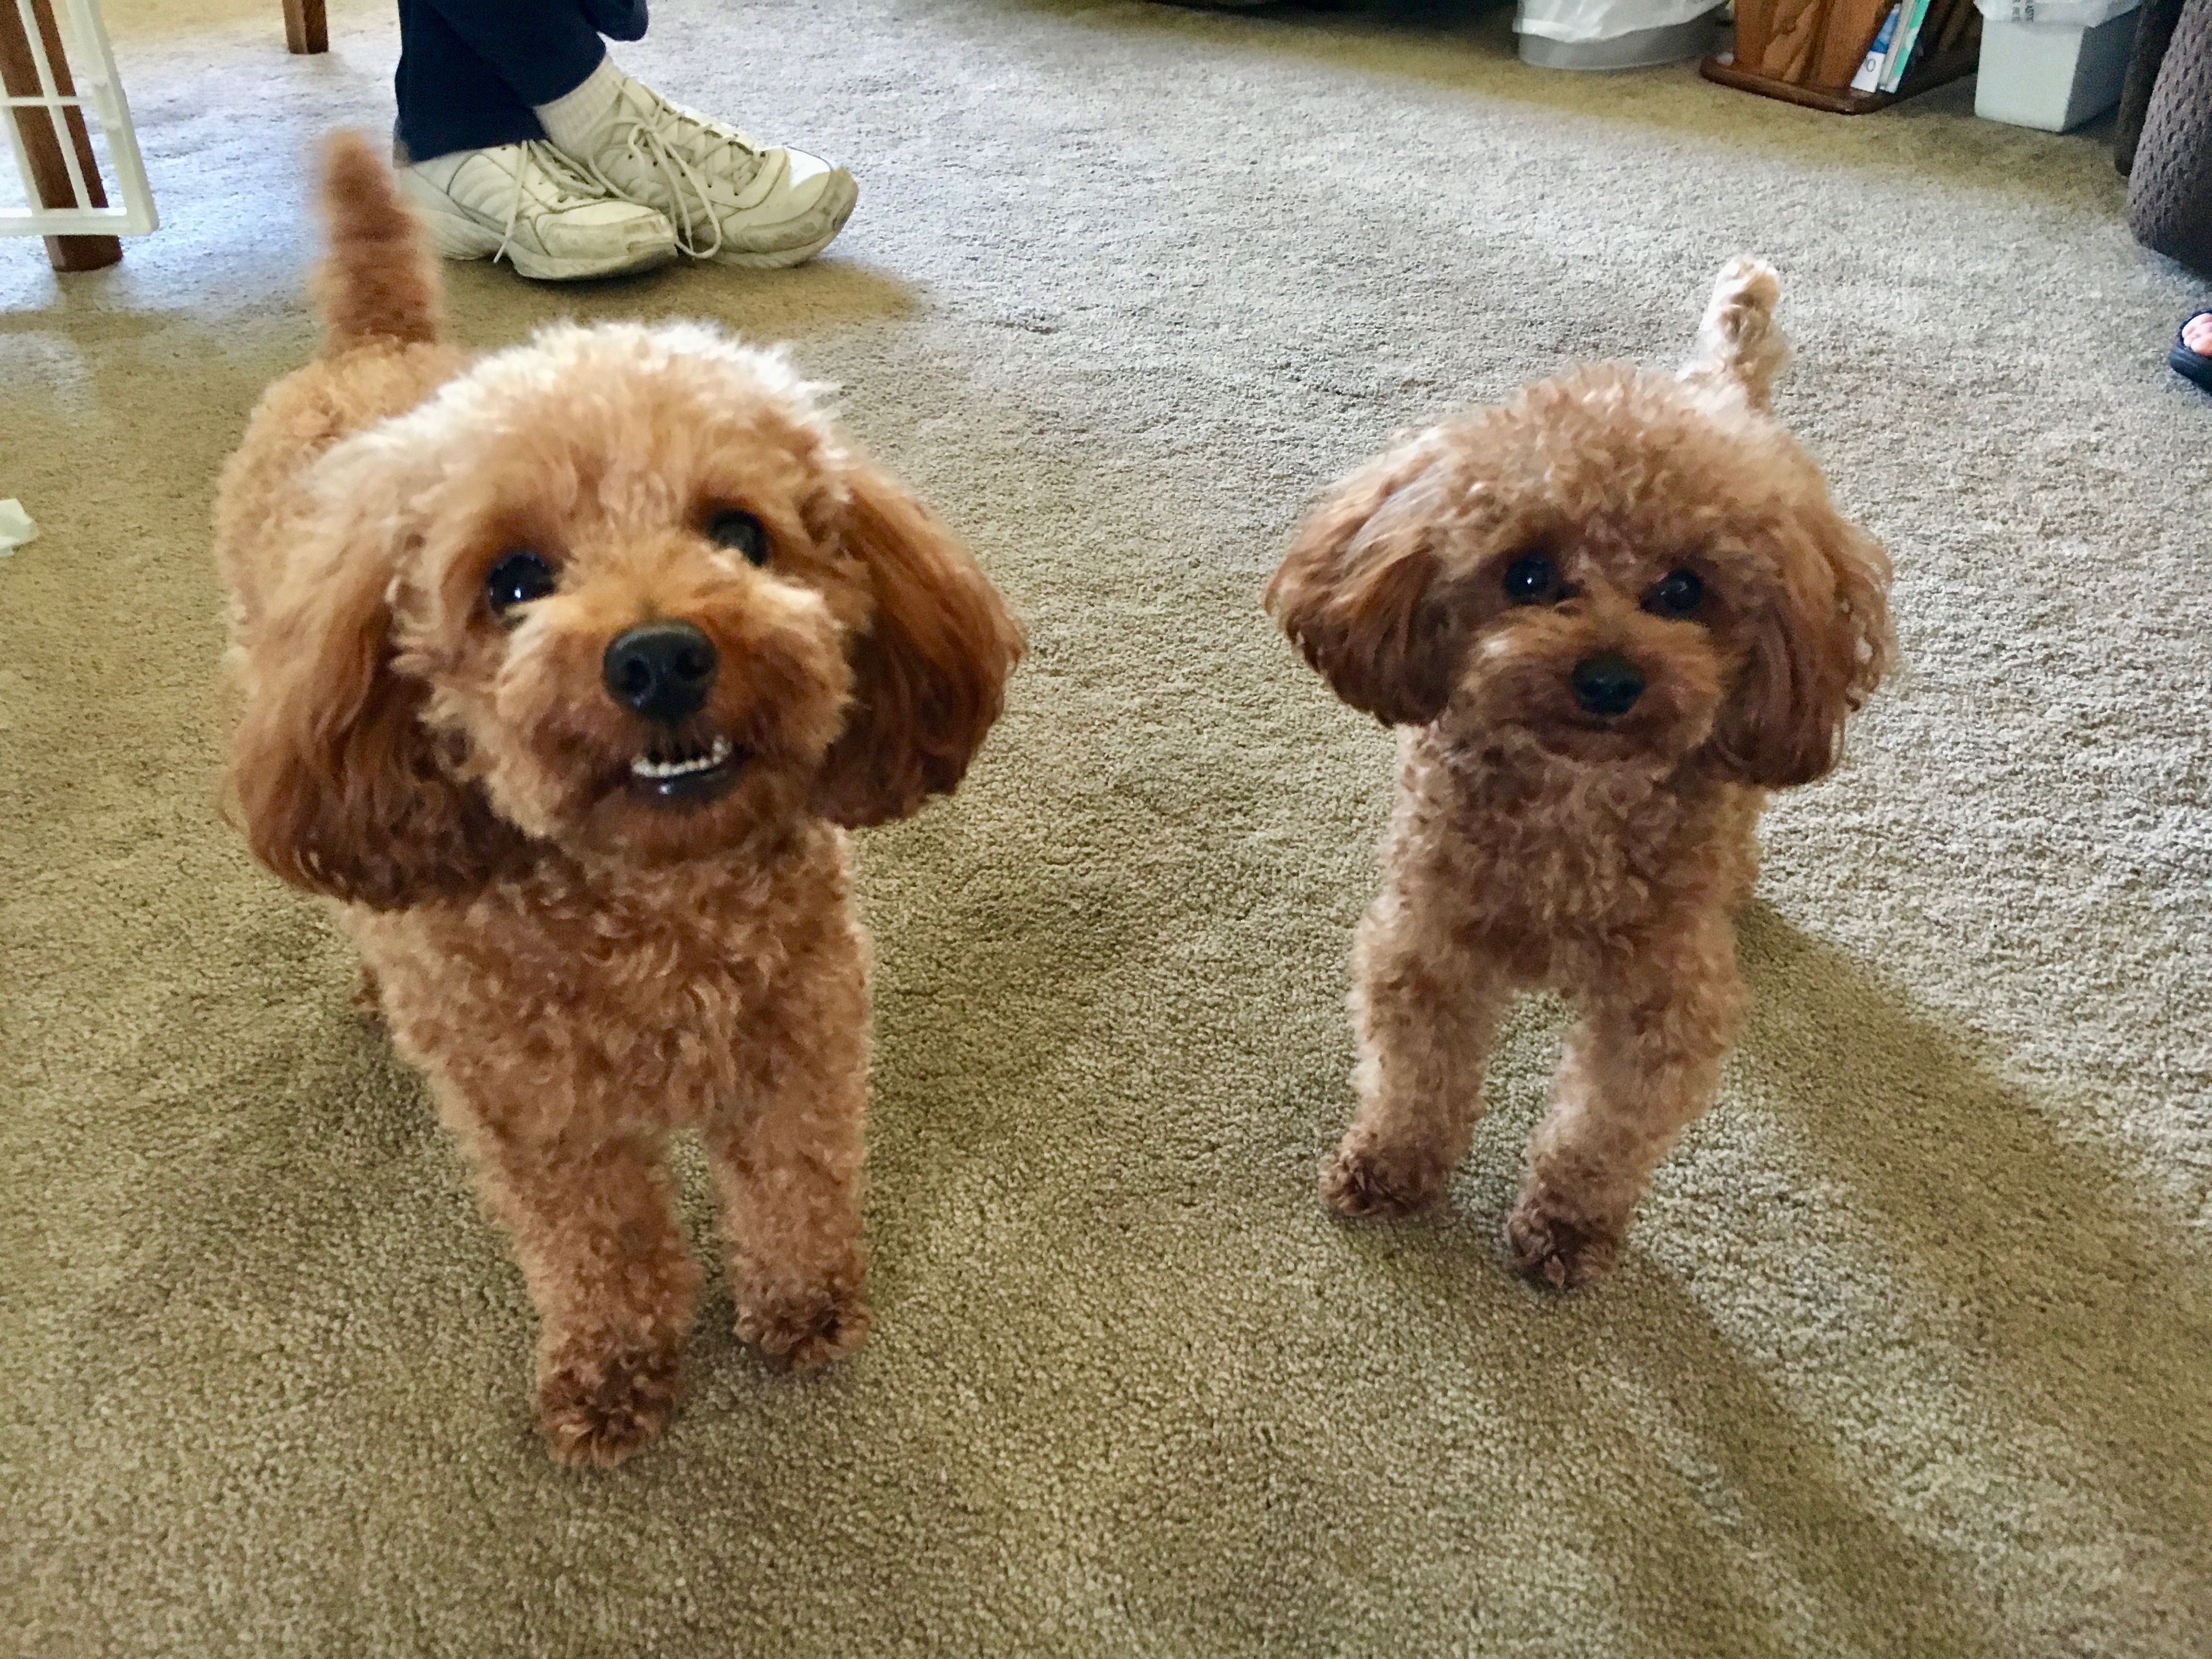 https://www.doggoneproblems.com/wp-content/uploads/2018/07/BaIley-and-Murphy.jpg